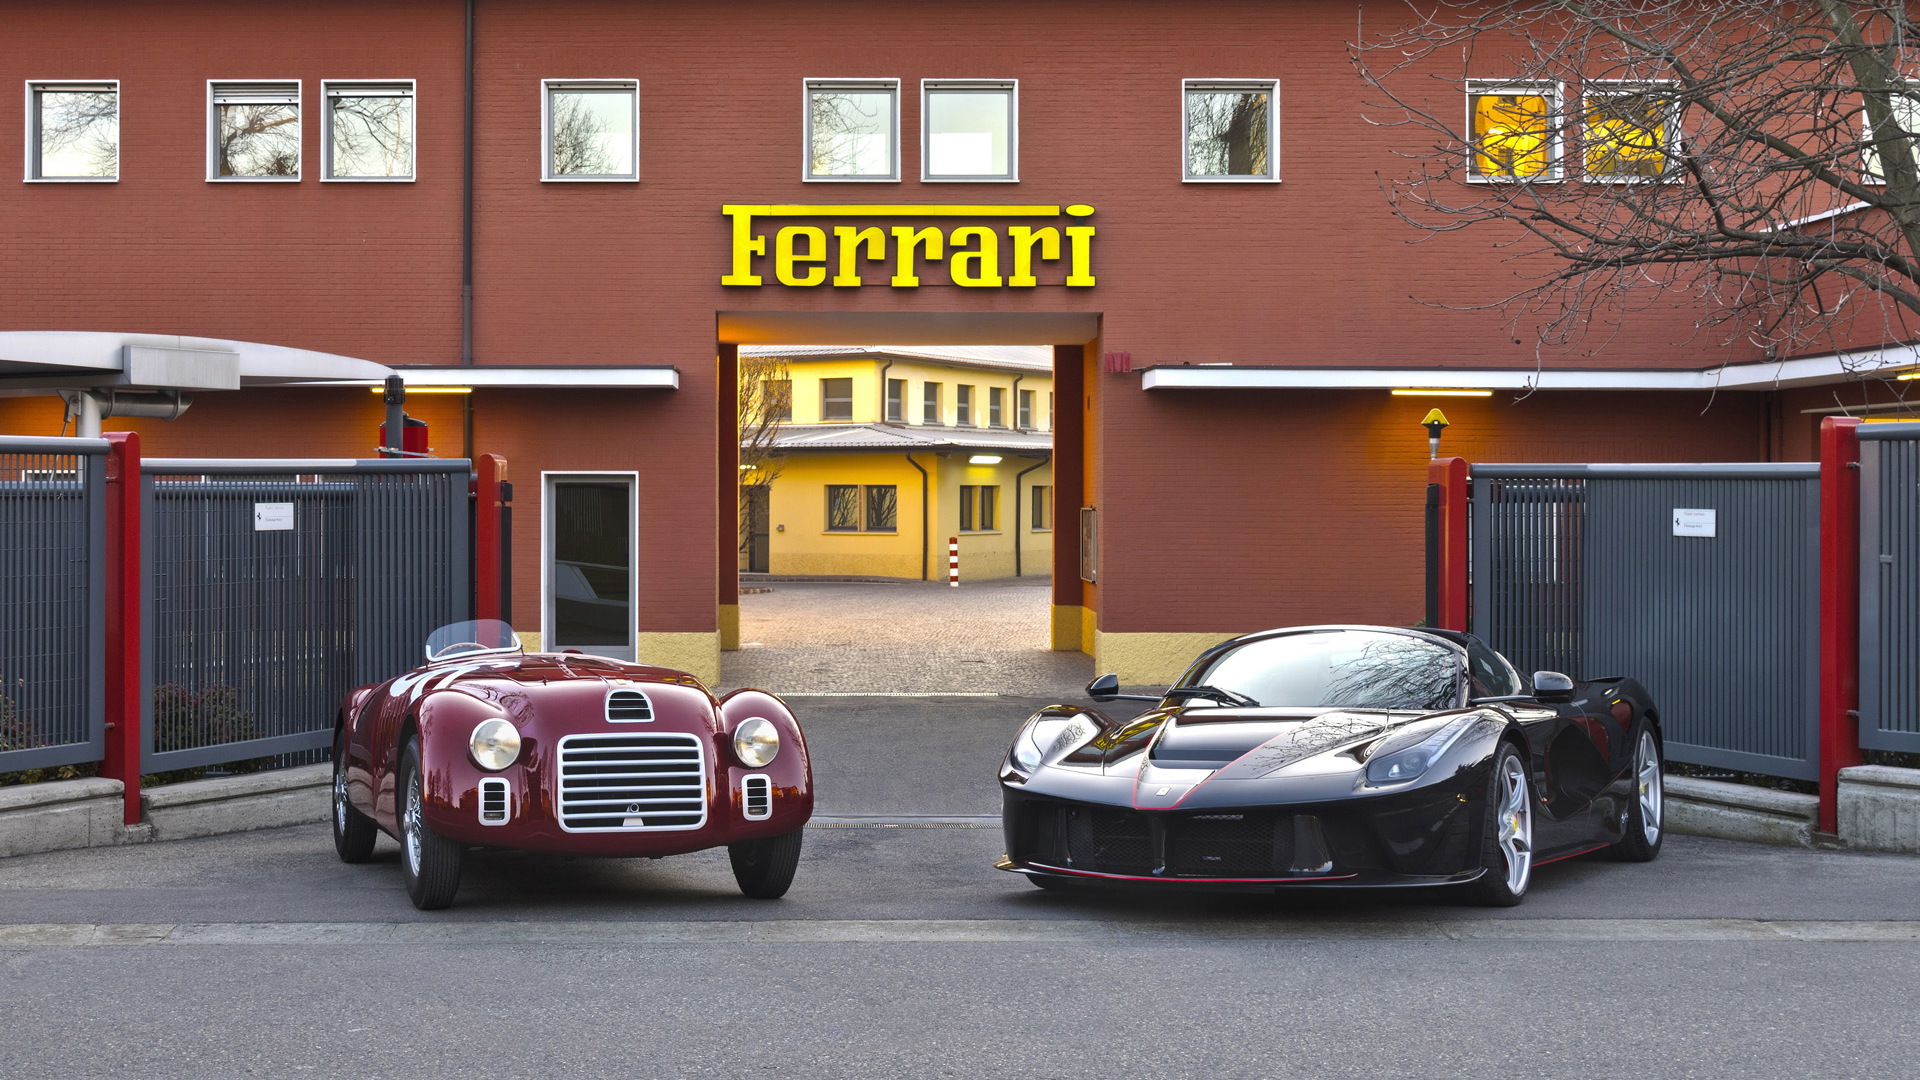 1947 Ferrari 125 S and 2017 Ferrari LaFerrari Aperta